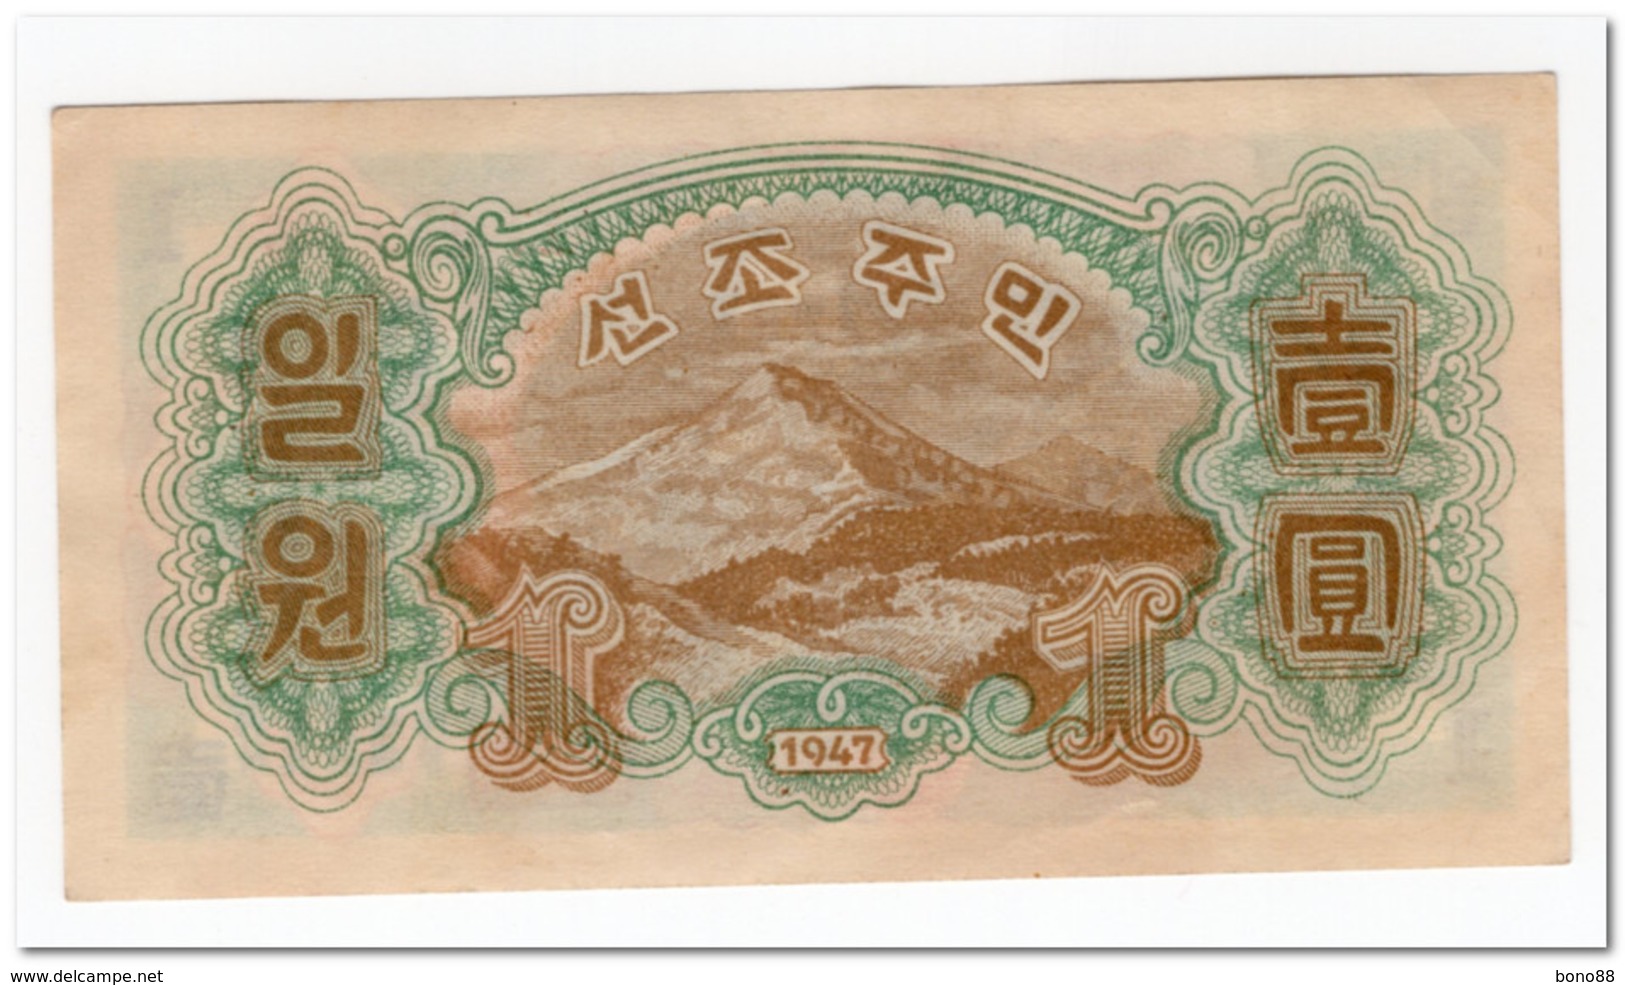 KOREA,1 WON,1947,P.8,AU - Korea, North